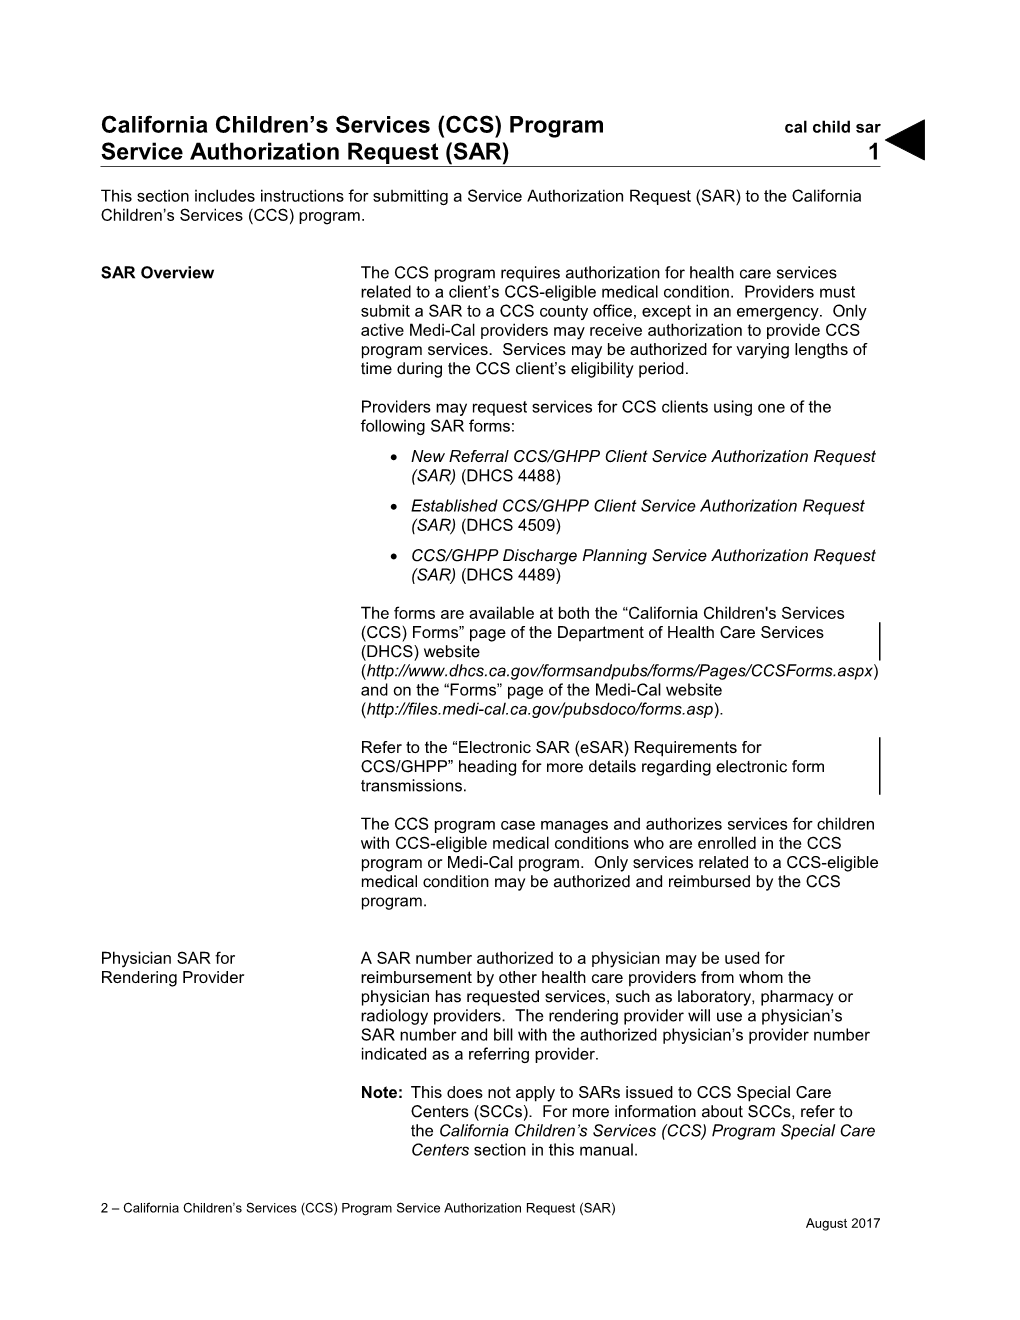 California Children's Services (CCS) Program Service Authorization Request (SAR) (Cal Child Sar)